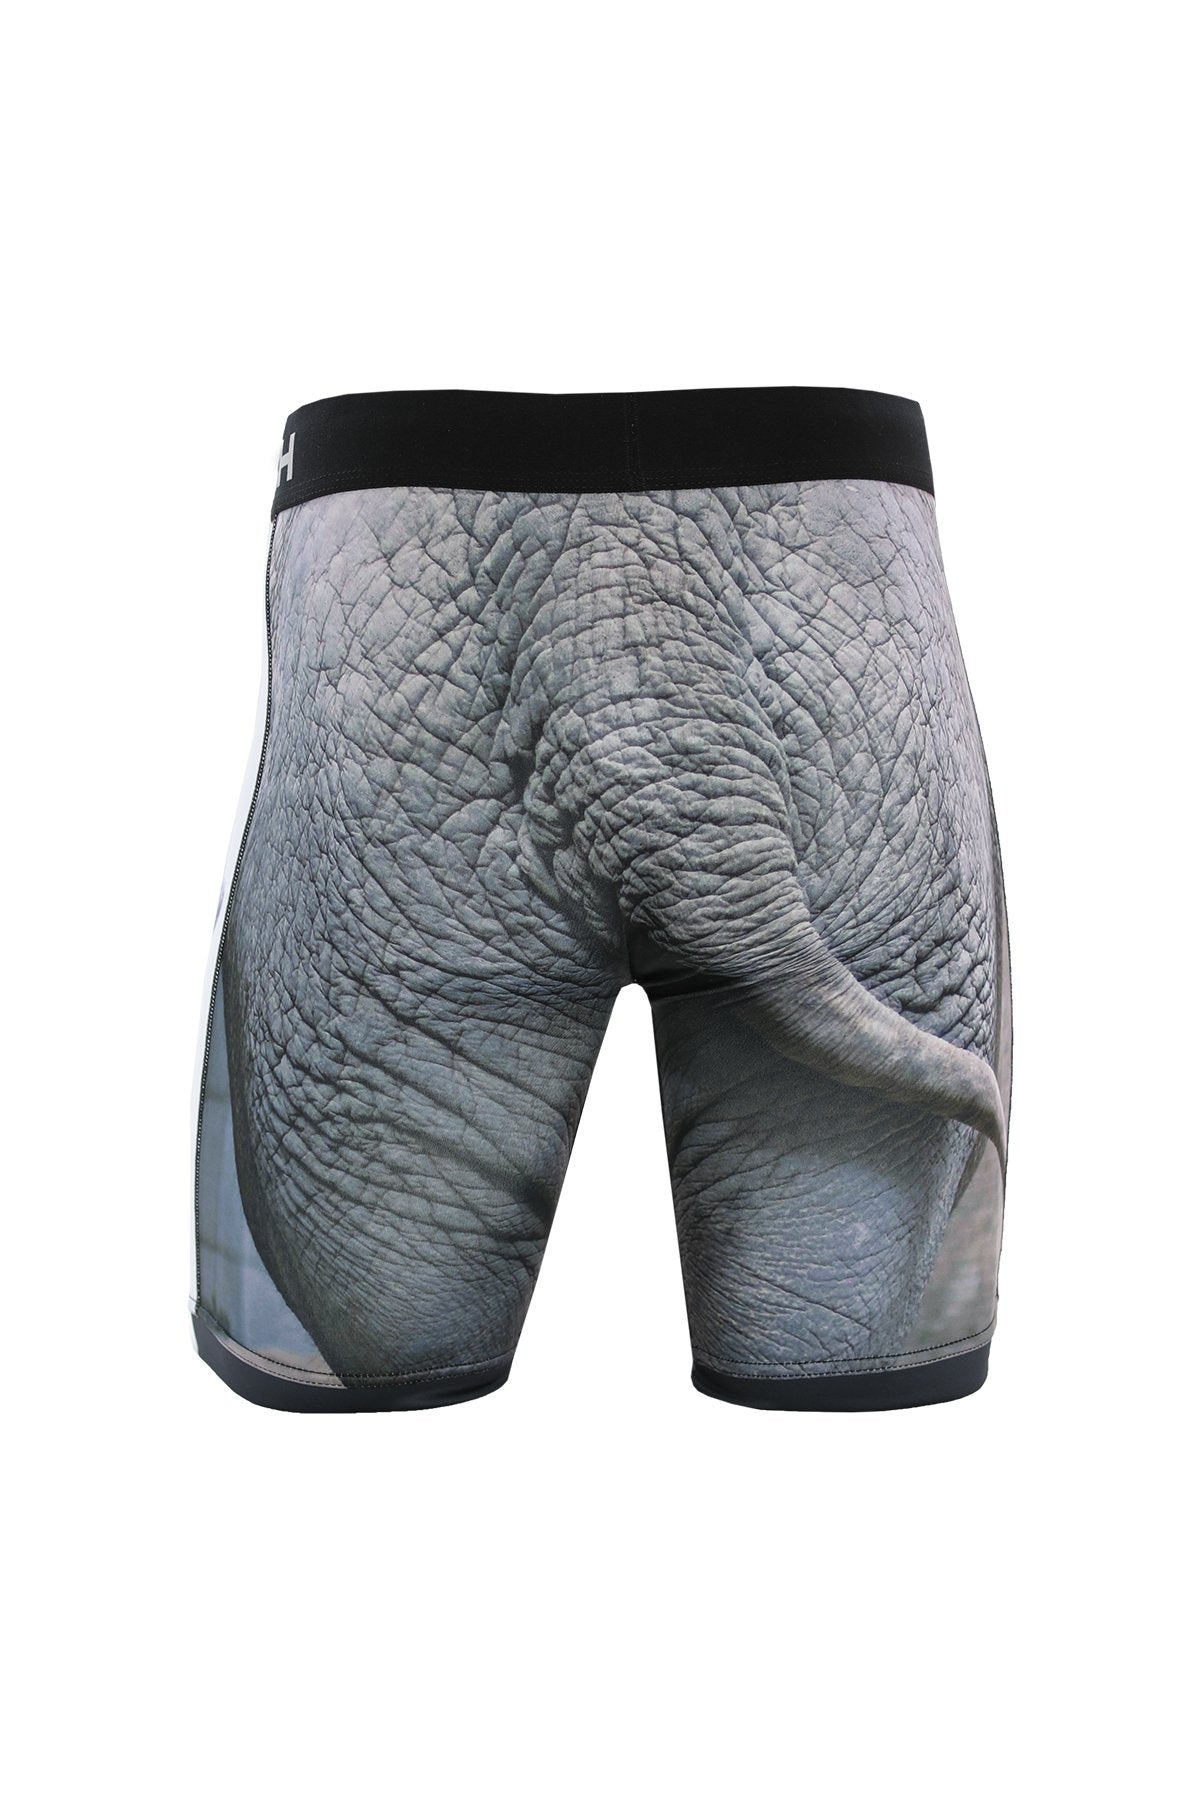 Wholesale elephant trunk boxer underwear, Stylish Undergarments For Him 